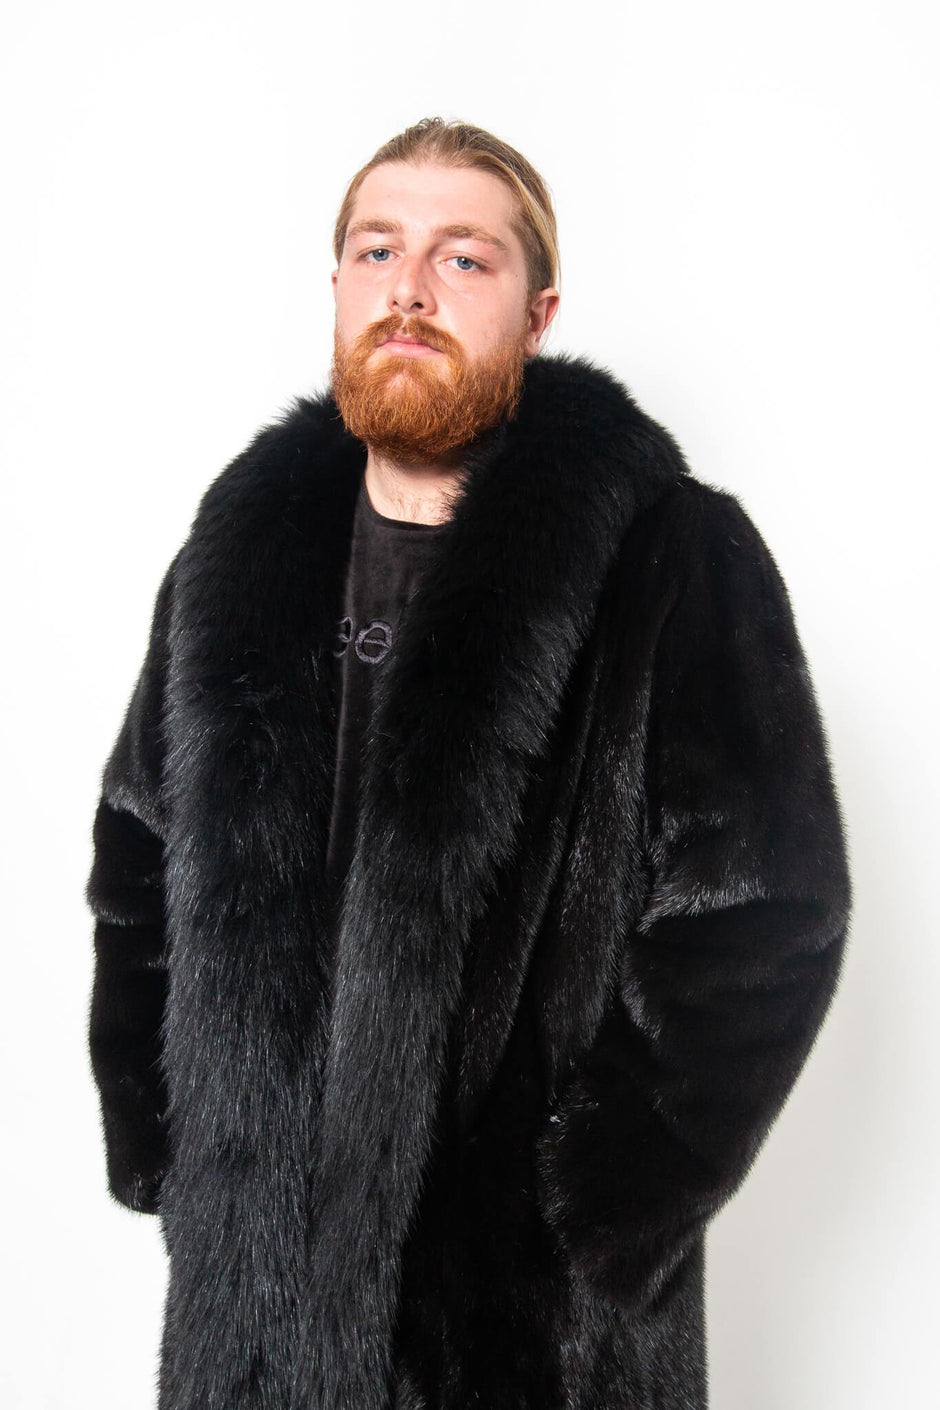 Starlight Furs - Canadian fur manufacturer - Montreal Fur Boutique